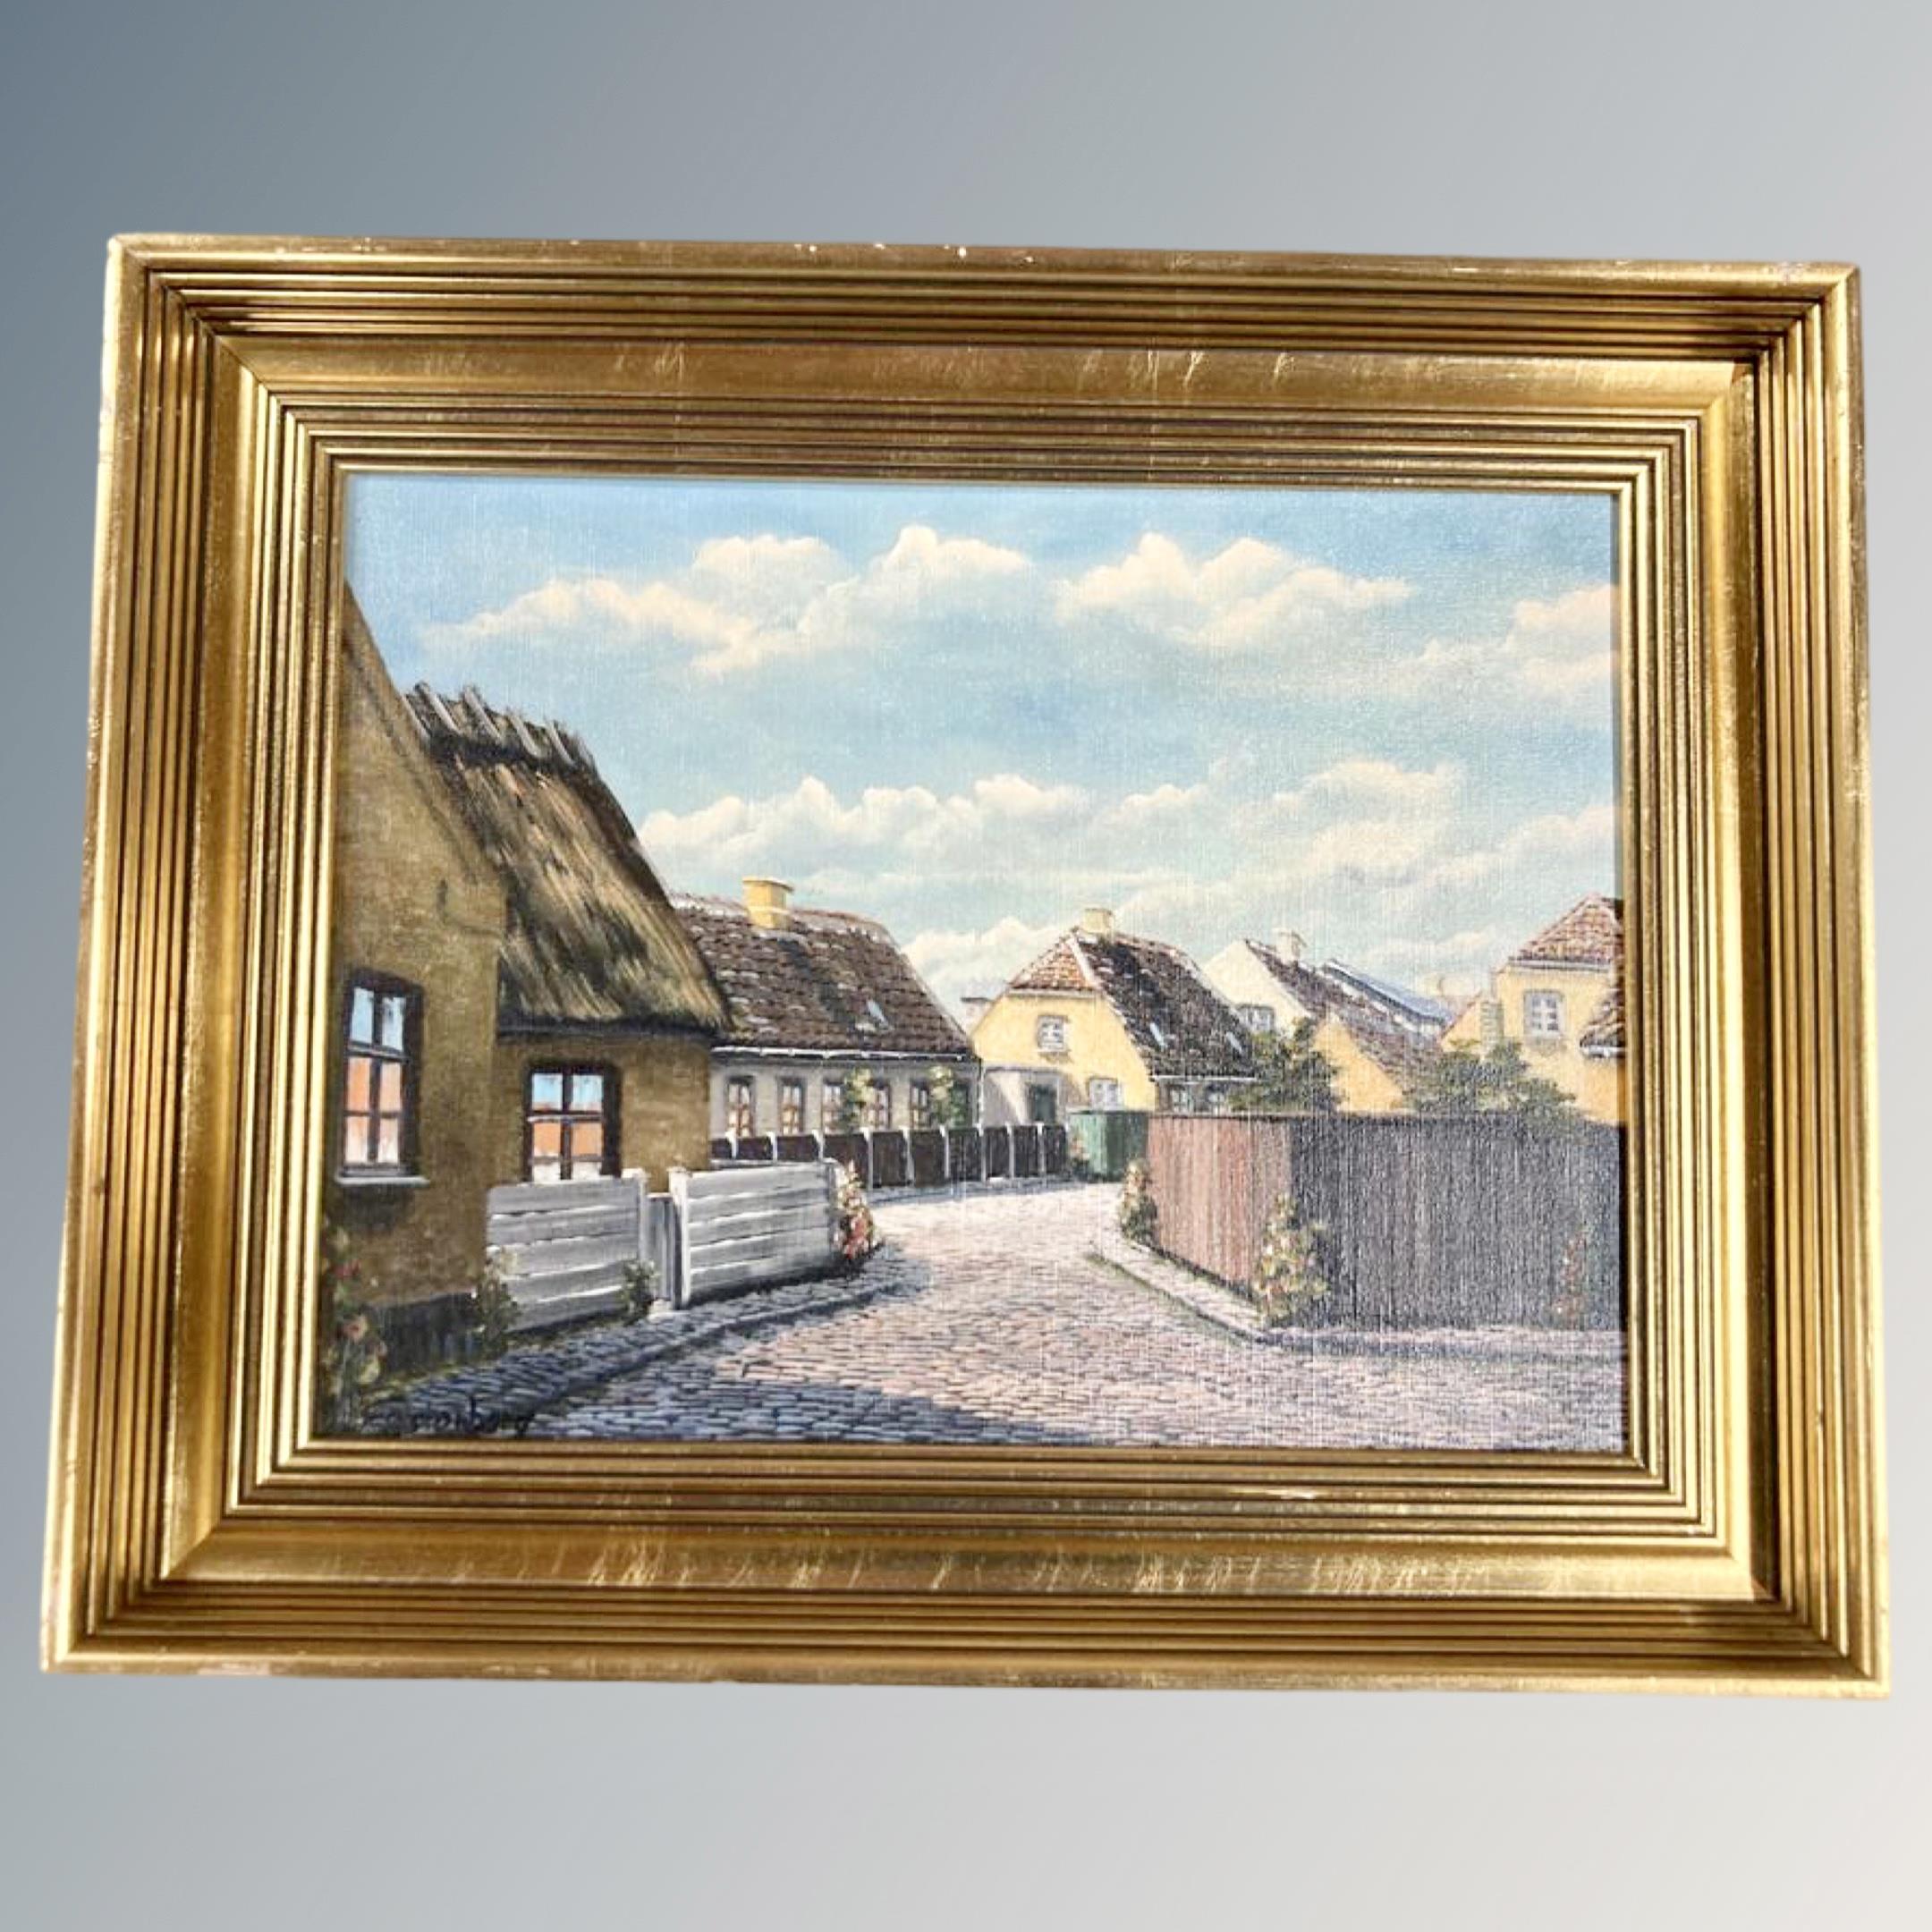 Twentieth century Continental School: A cobbled street scene, oil on canvas, 39 cm x 29 cm. Framed.